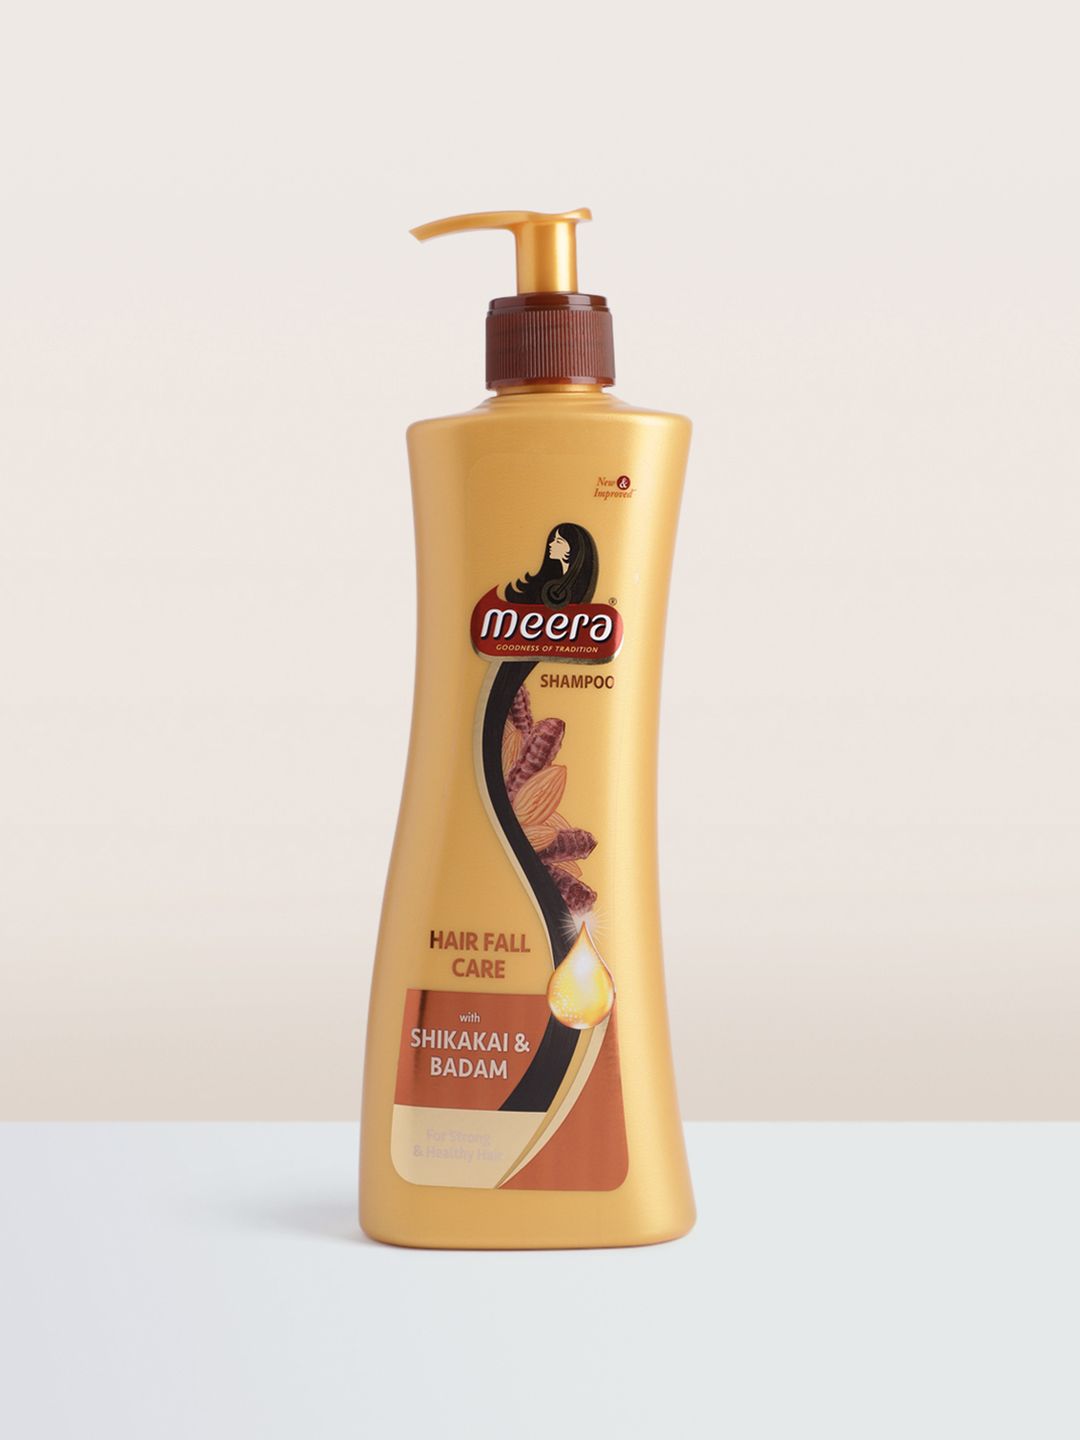 Meera GOODNESS OF TRADITION Hairfall Care Shampoo with Shikakai & Badam 340 ml Price in India